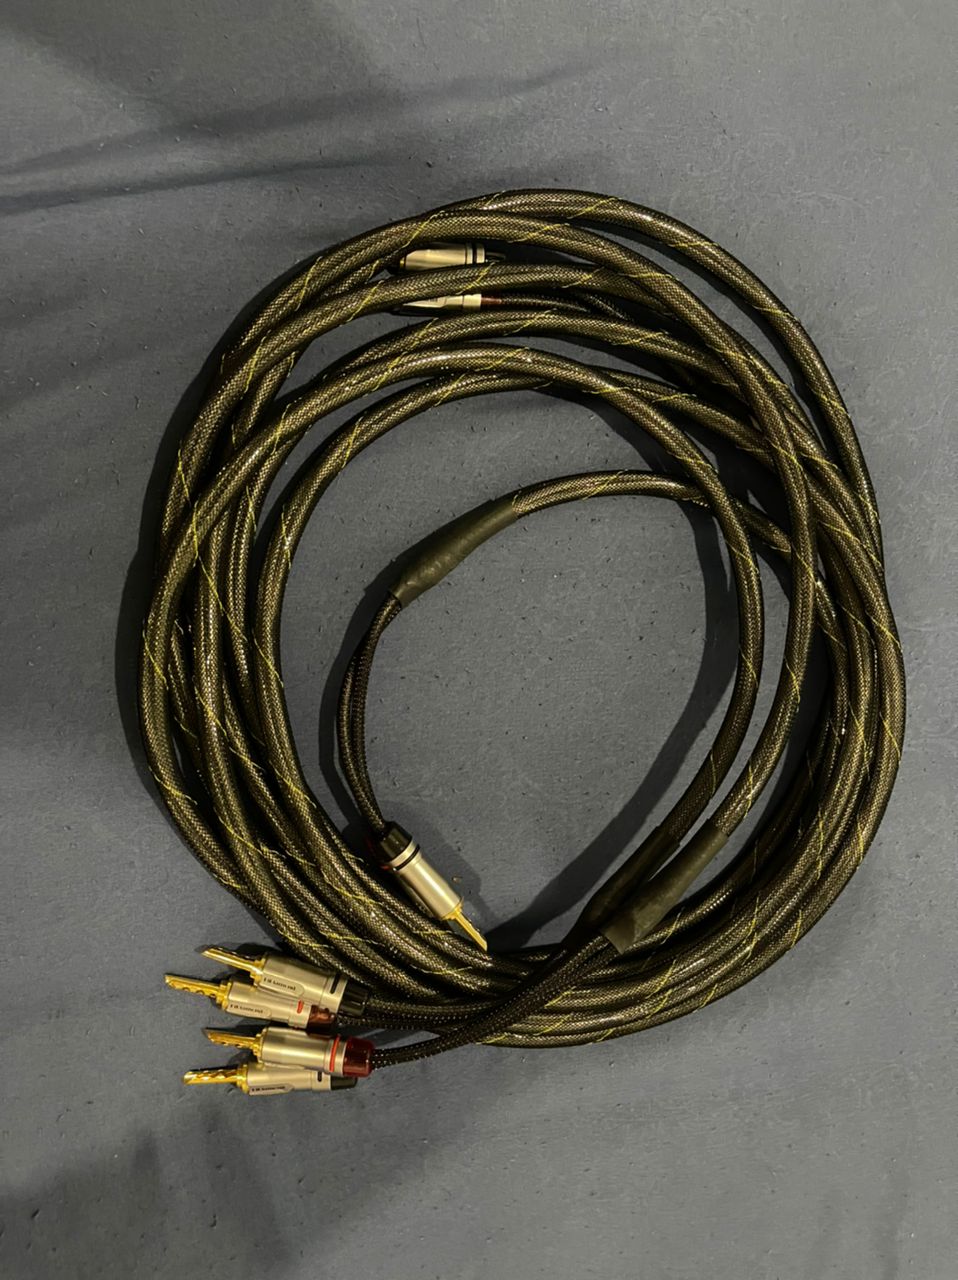 HiDiamond D1 , D2 speaker cables Whatsa25